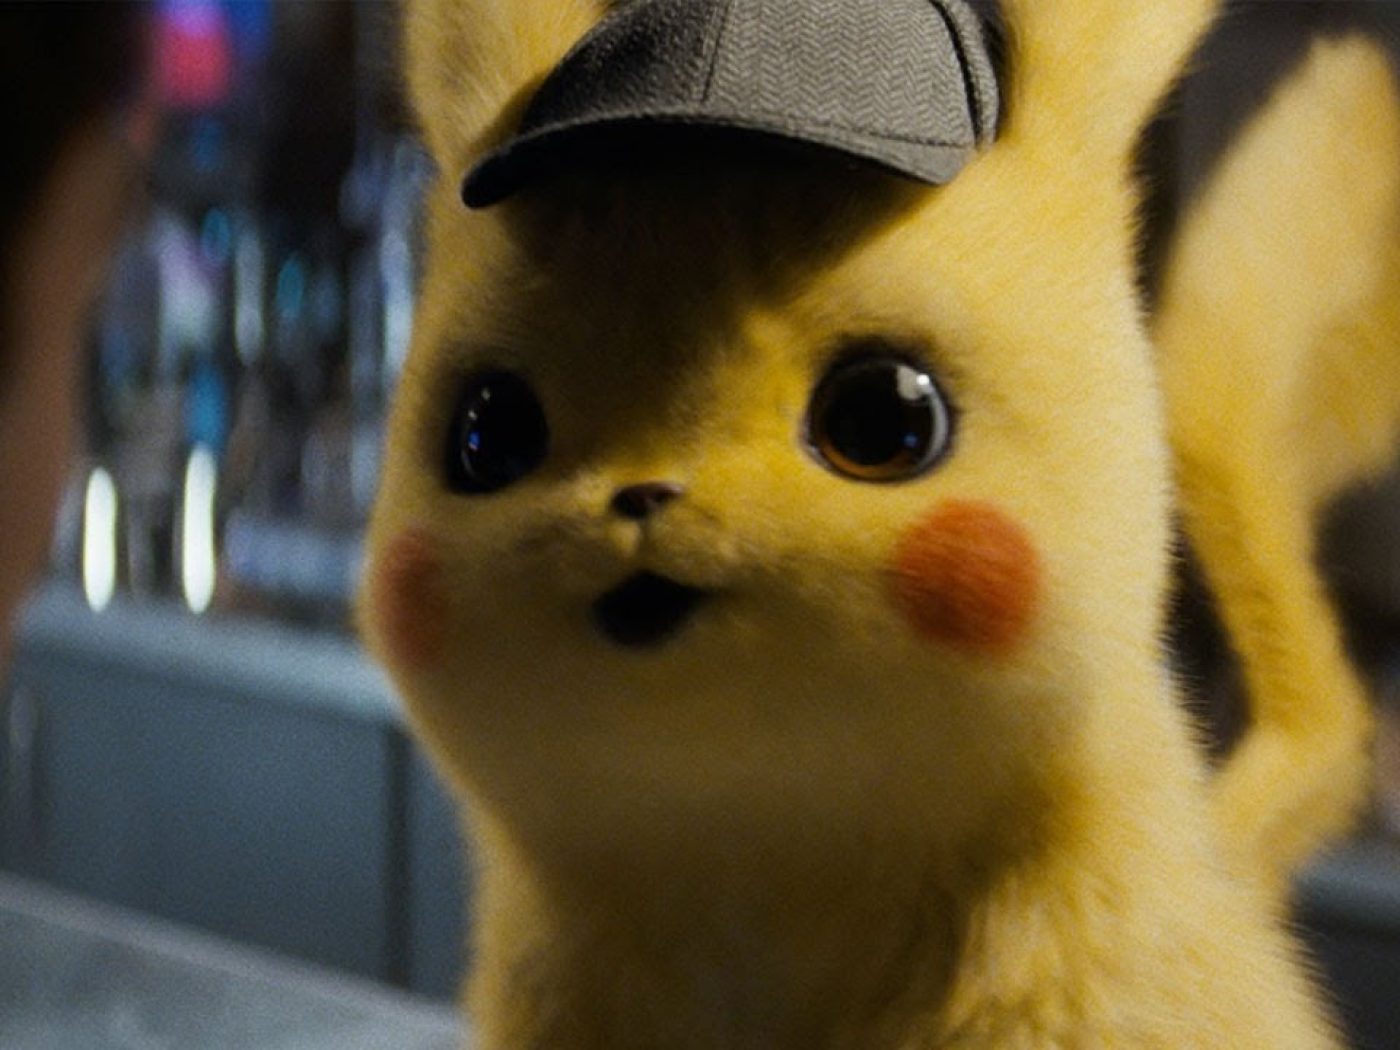 Pokémon: Detective Pikachu' Review - Spotlight Report